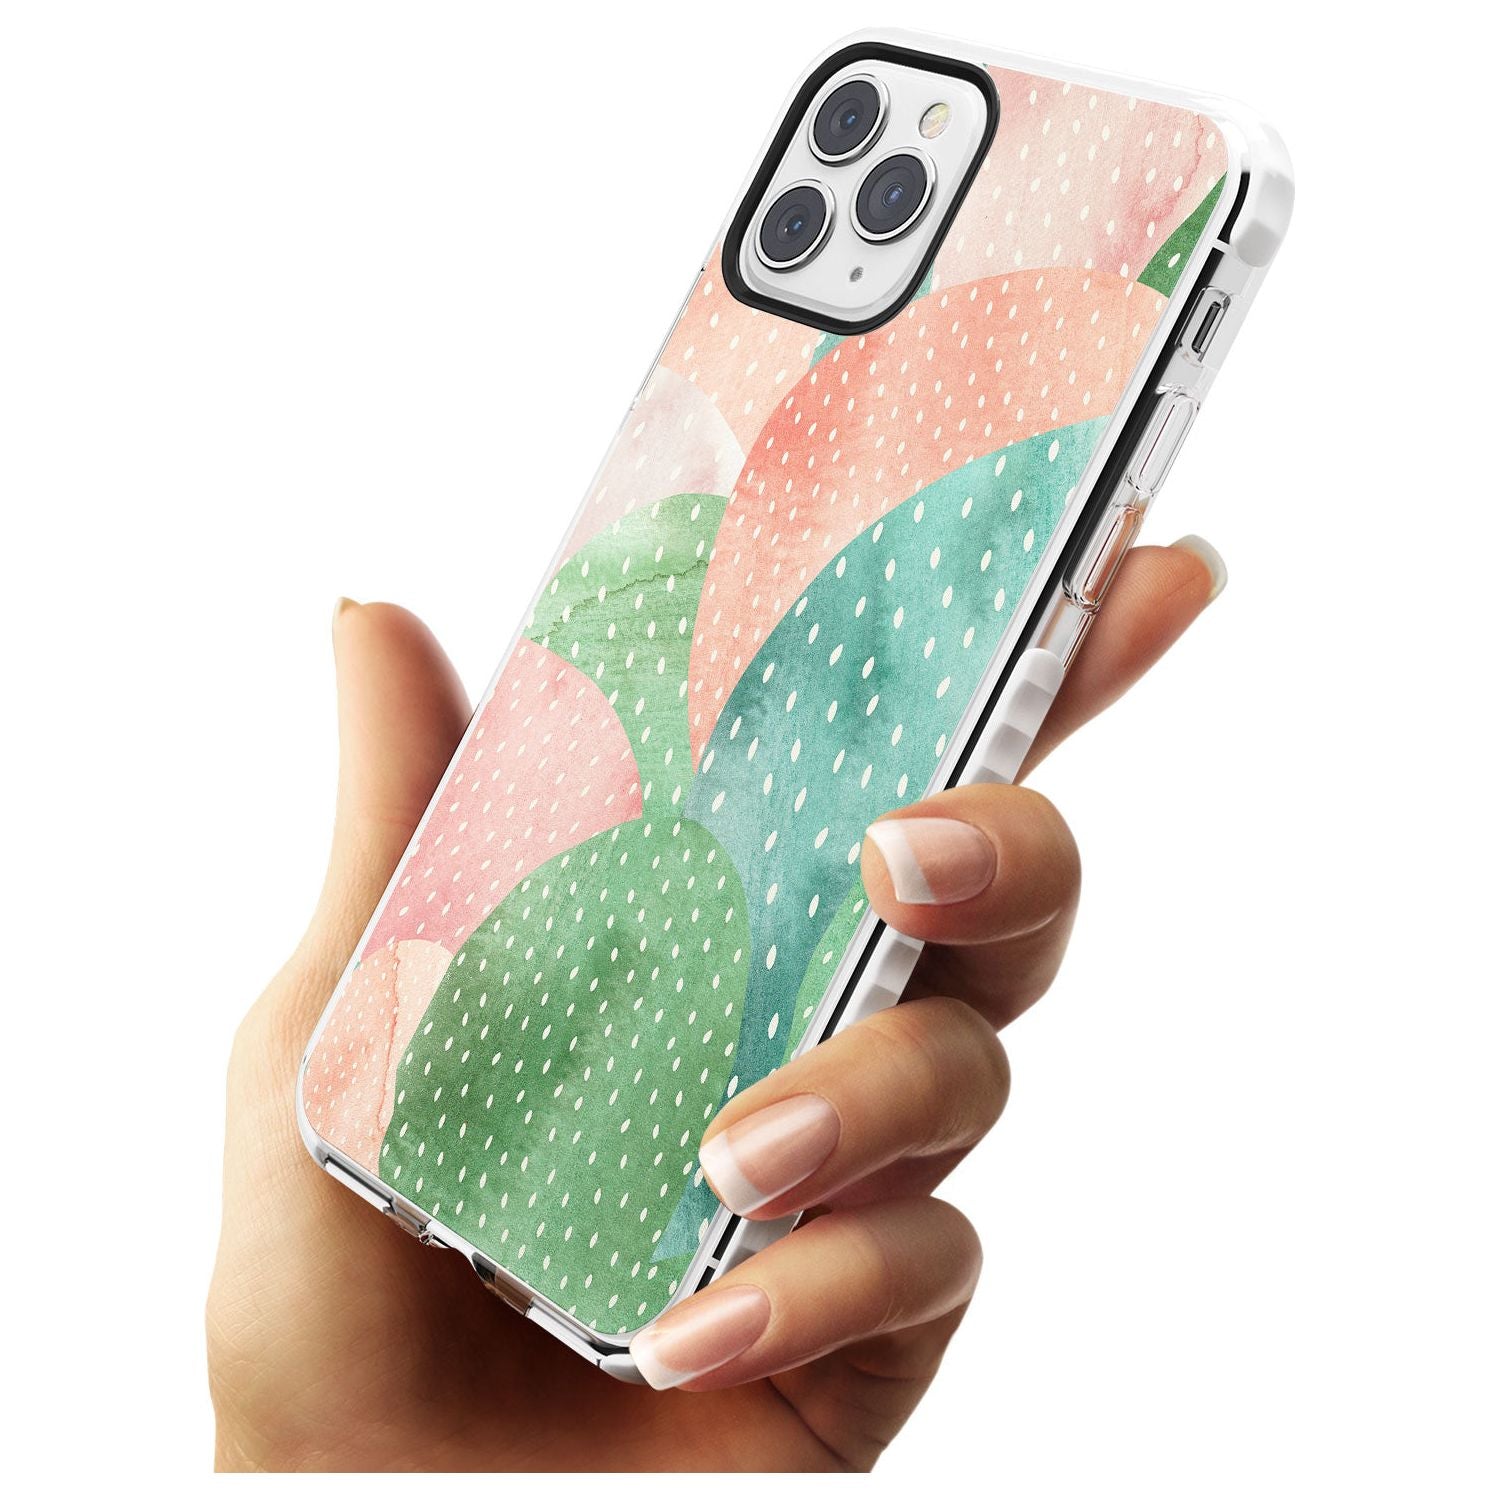 Colourful Close-Up Cacti Design Impact Phone Case for iPhone 11 Pro Max